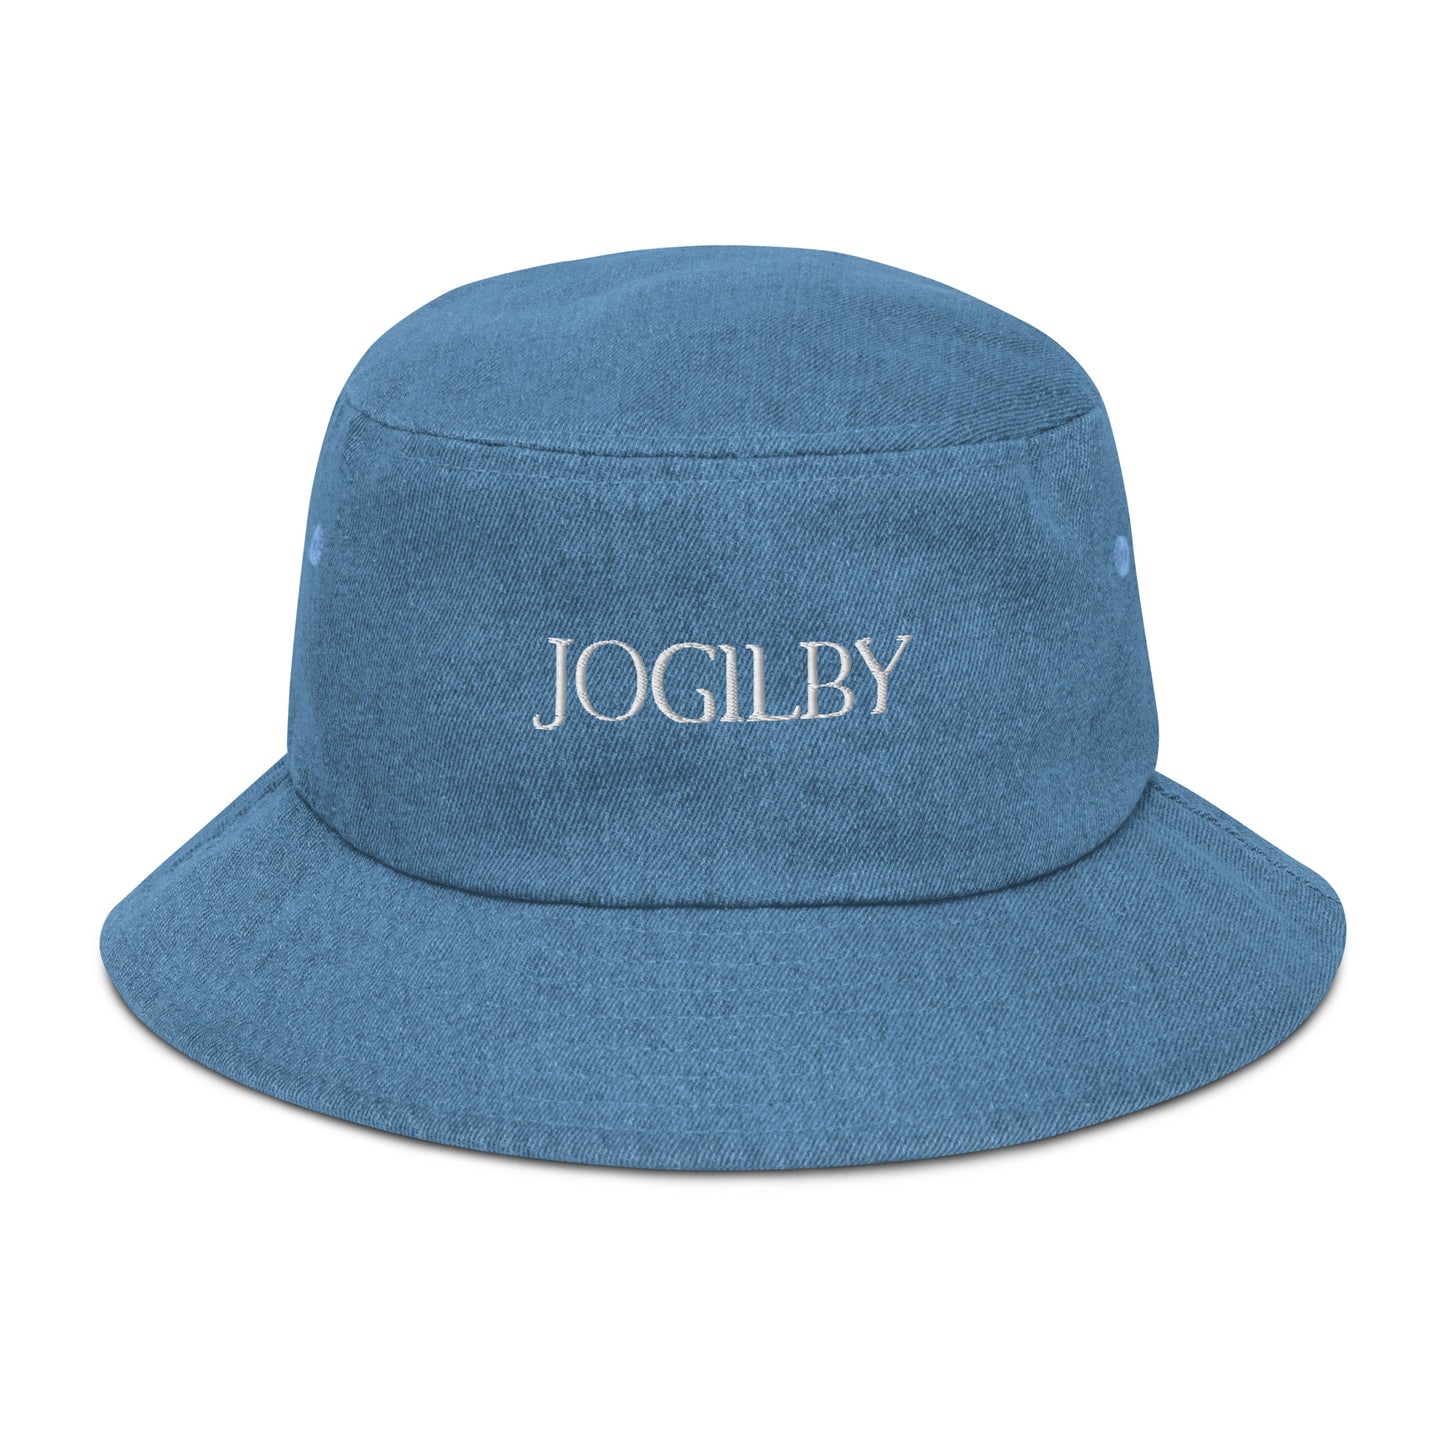 Jogilby Denim Bucket Hat